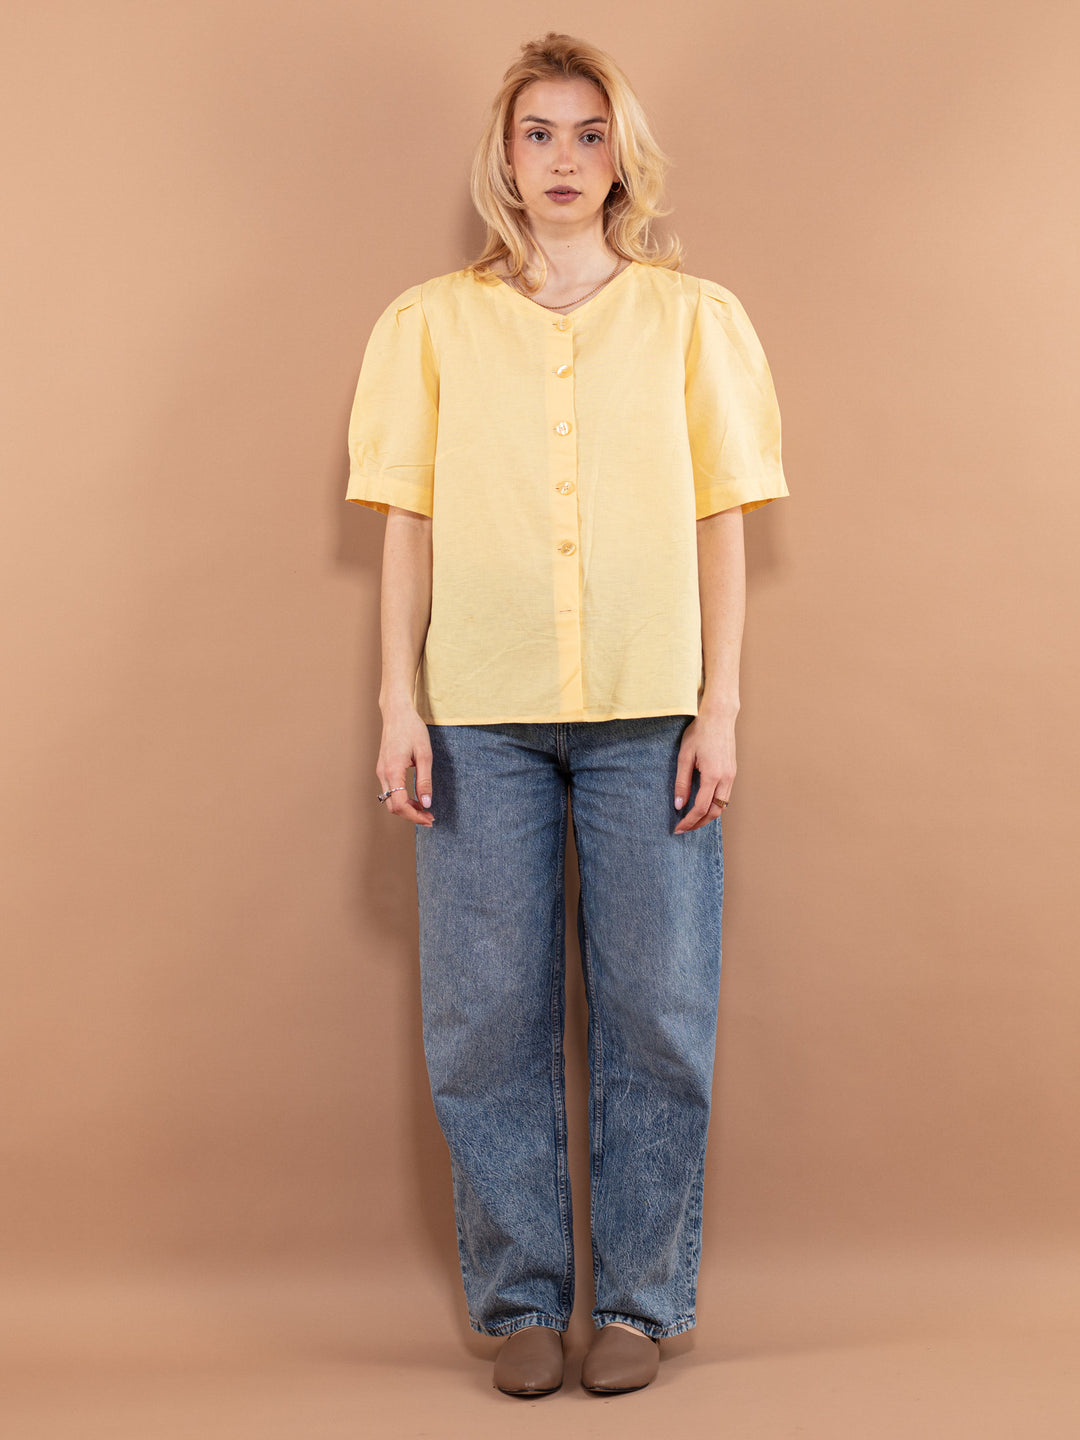 Yellow Linen Top, Size L, Linen Blend Blouse, Loose Linen Shirt, Puff Short Sleeve Top, Linen Clothing, Vintage Top, Cottagecore Top